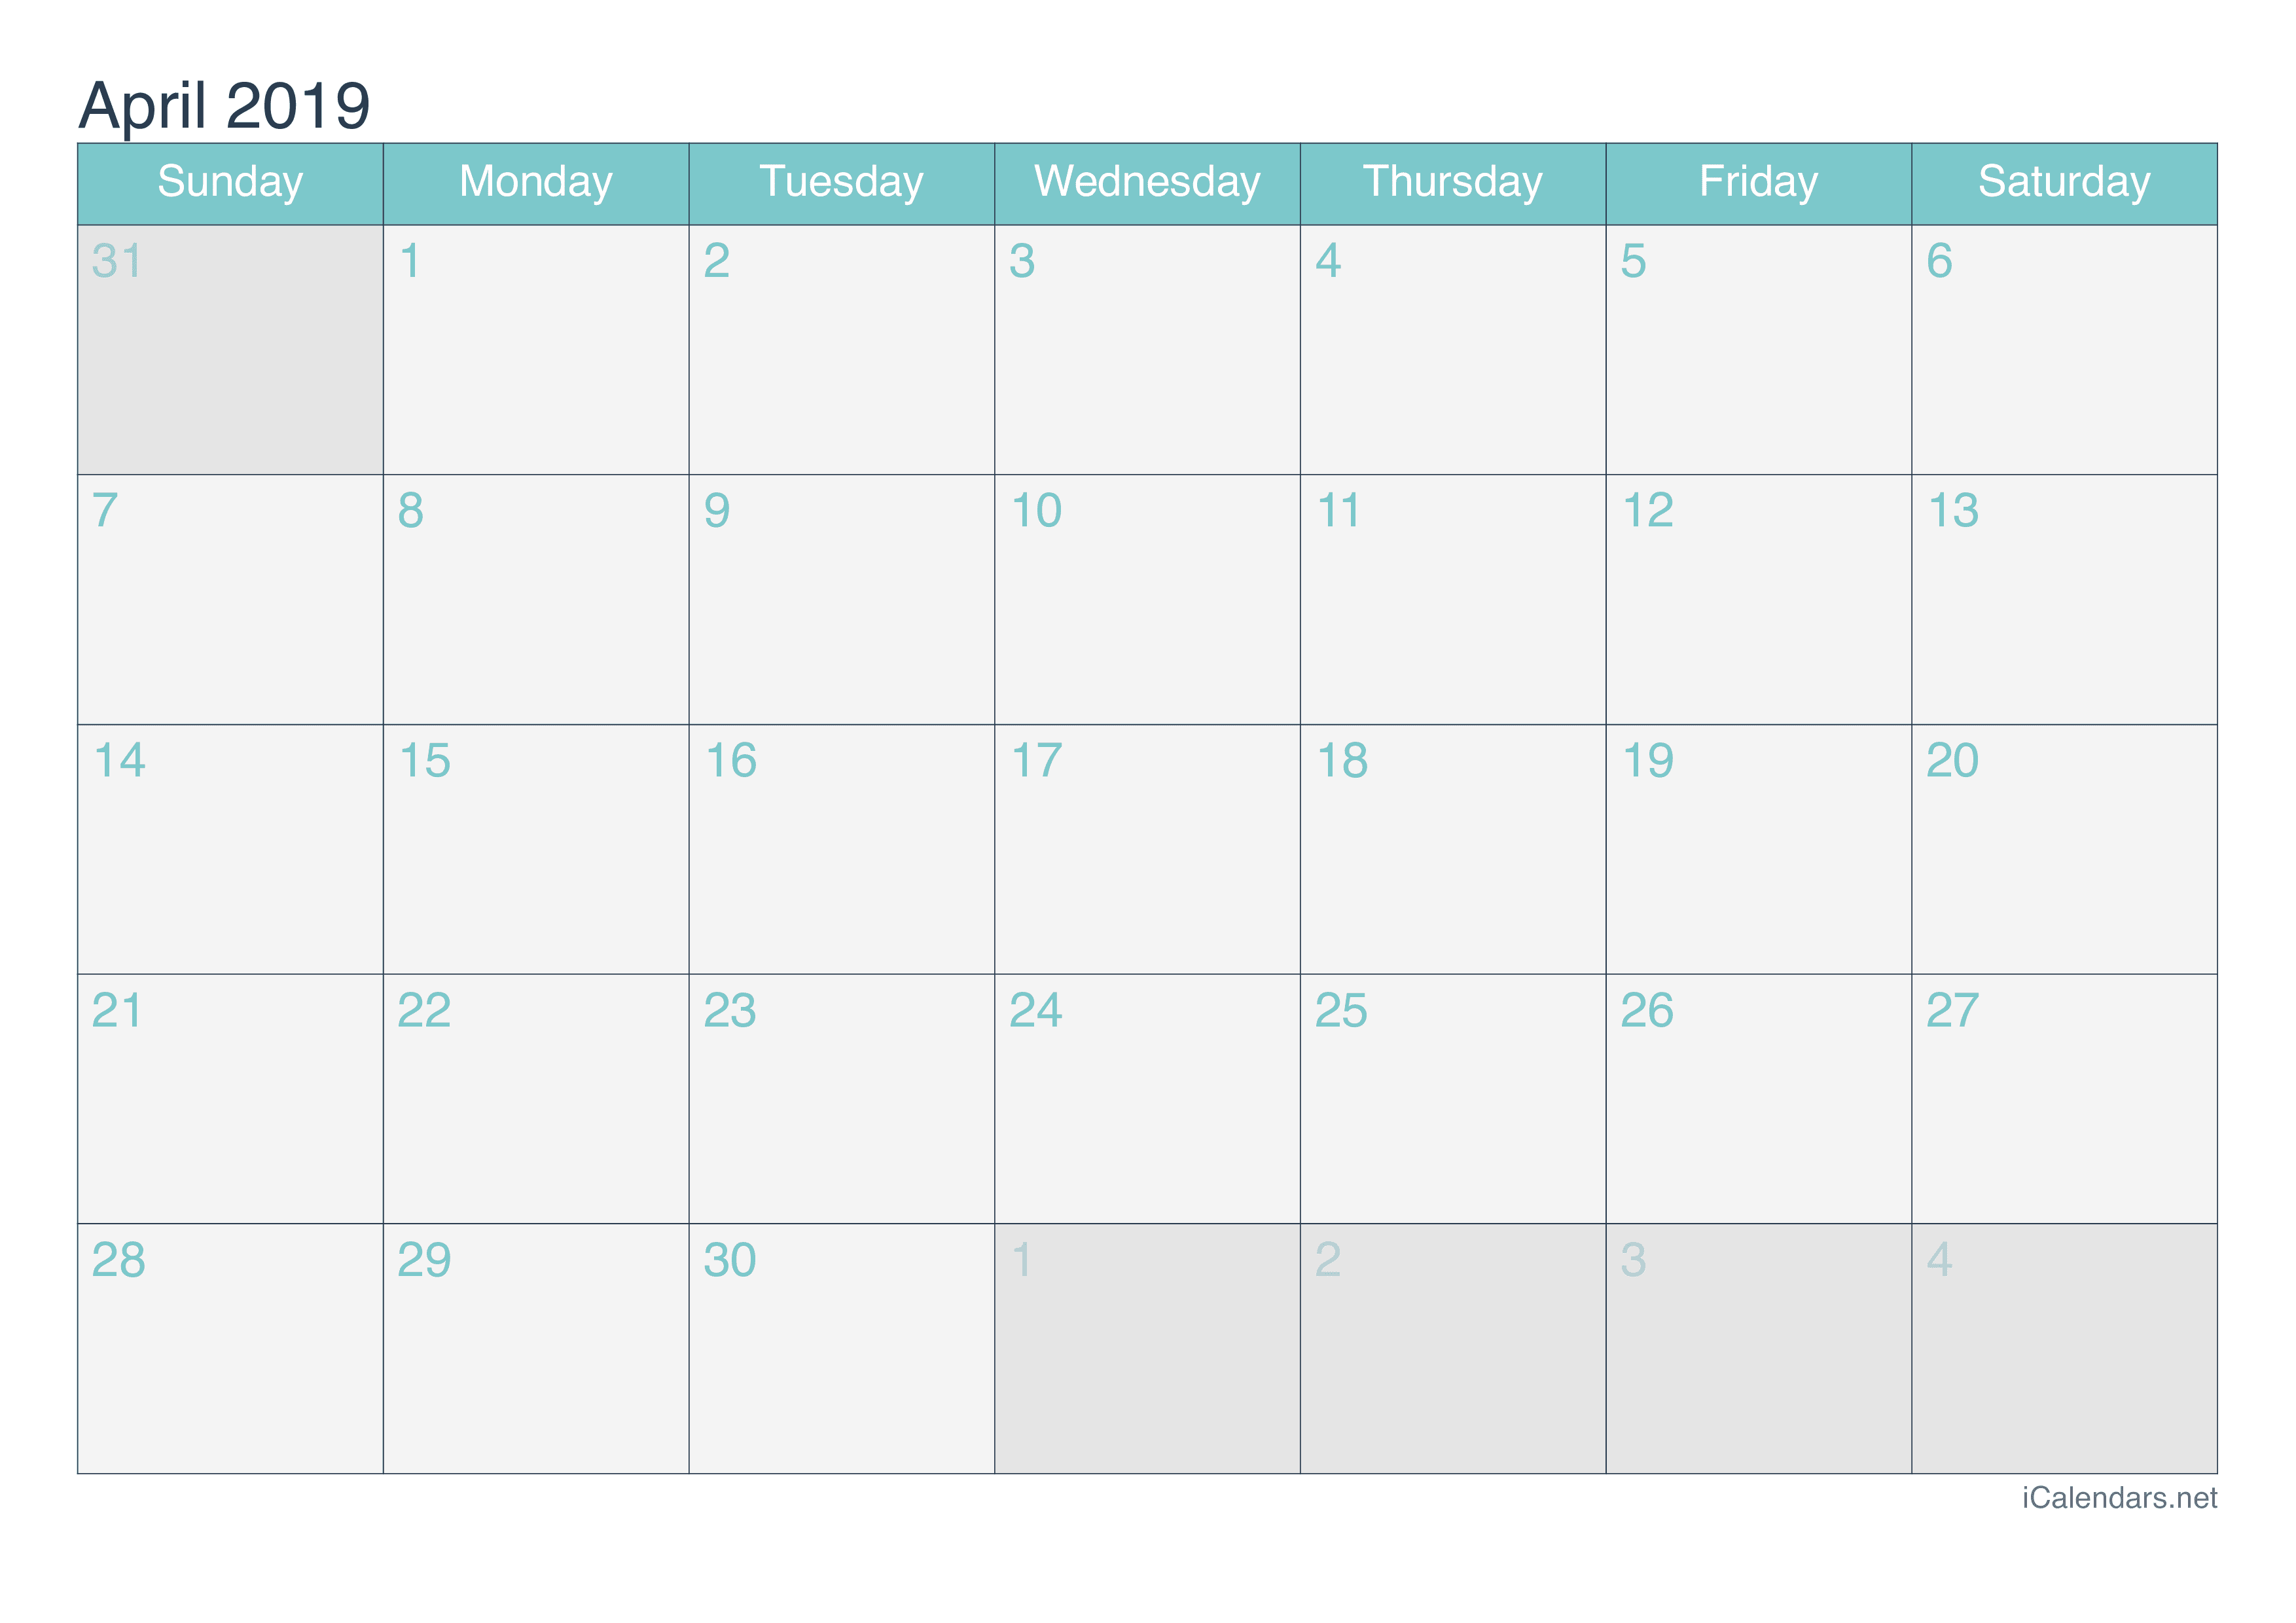 april-2019-printable-calendar-icalendars